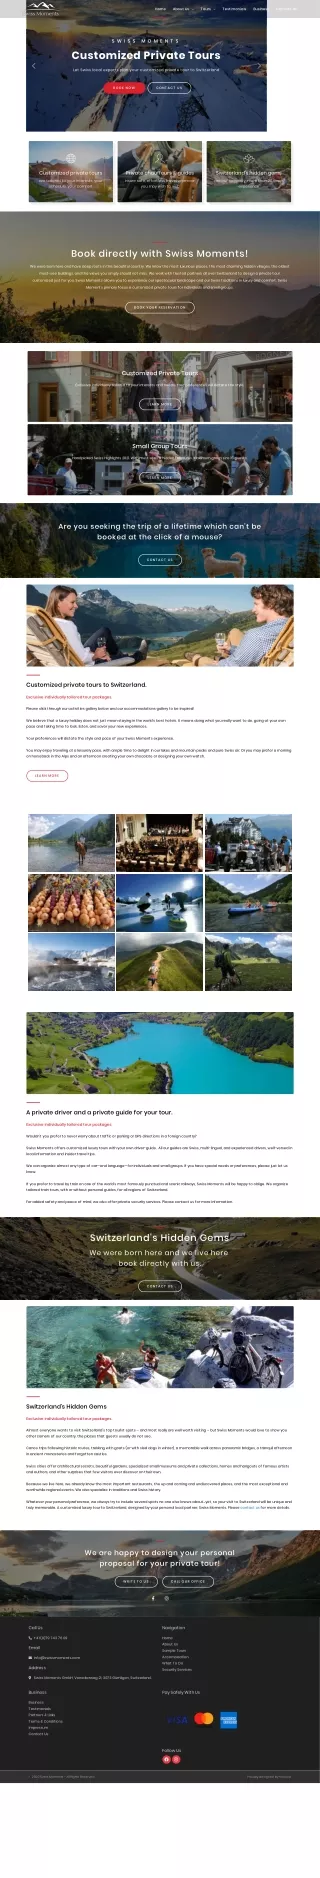 Customized tour Switzerland - Swissmoments.com